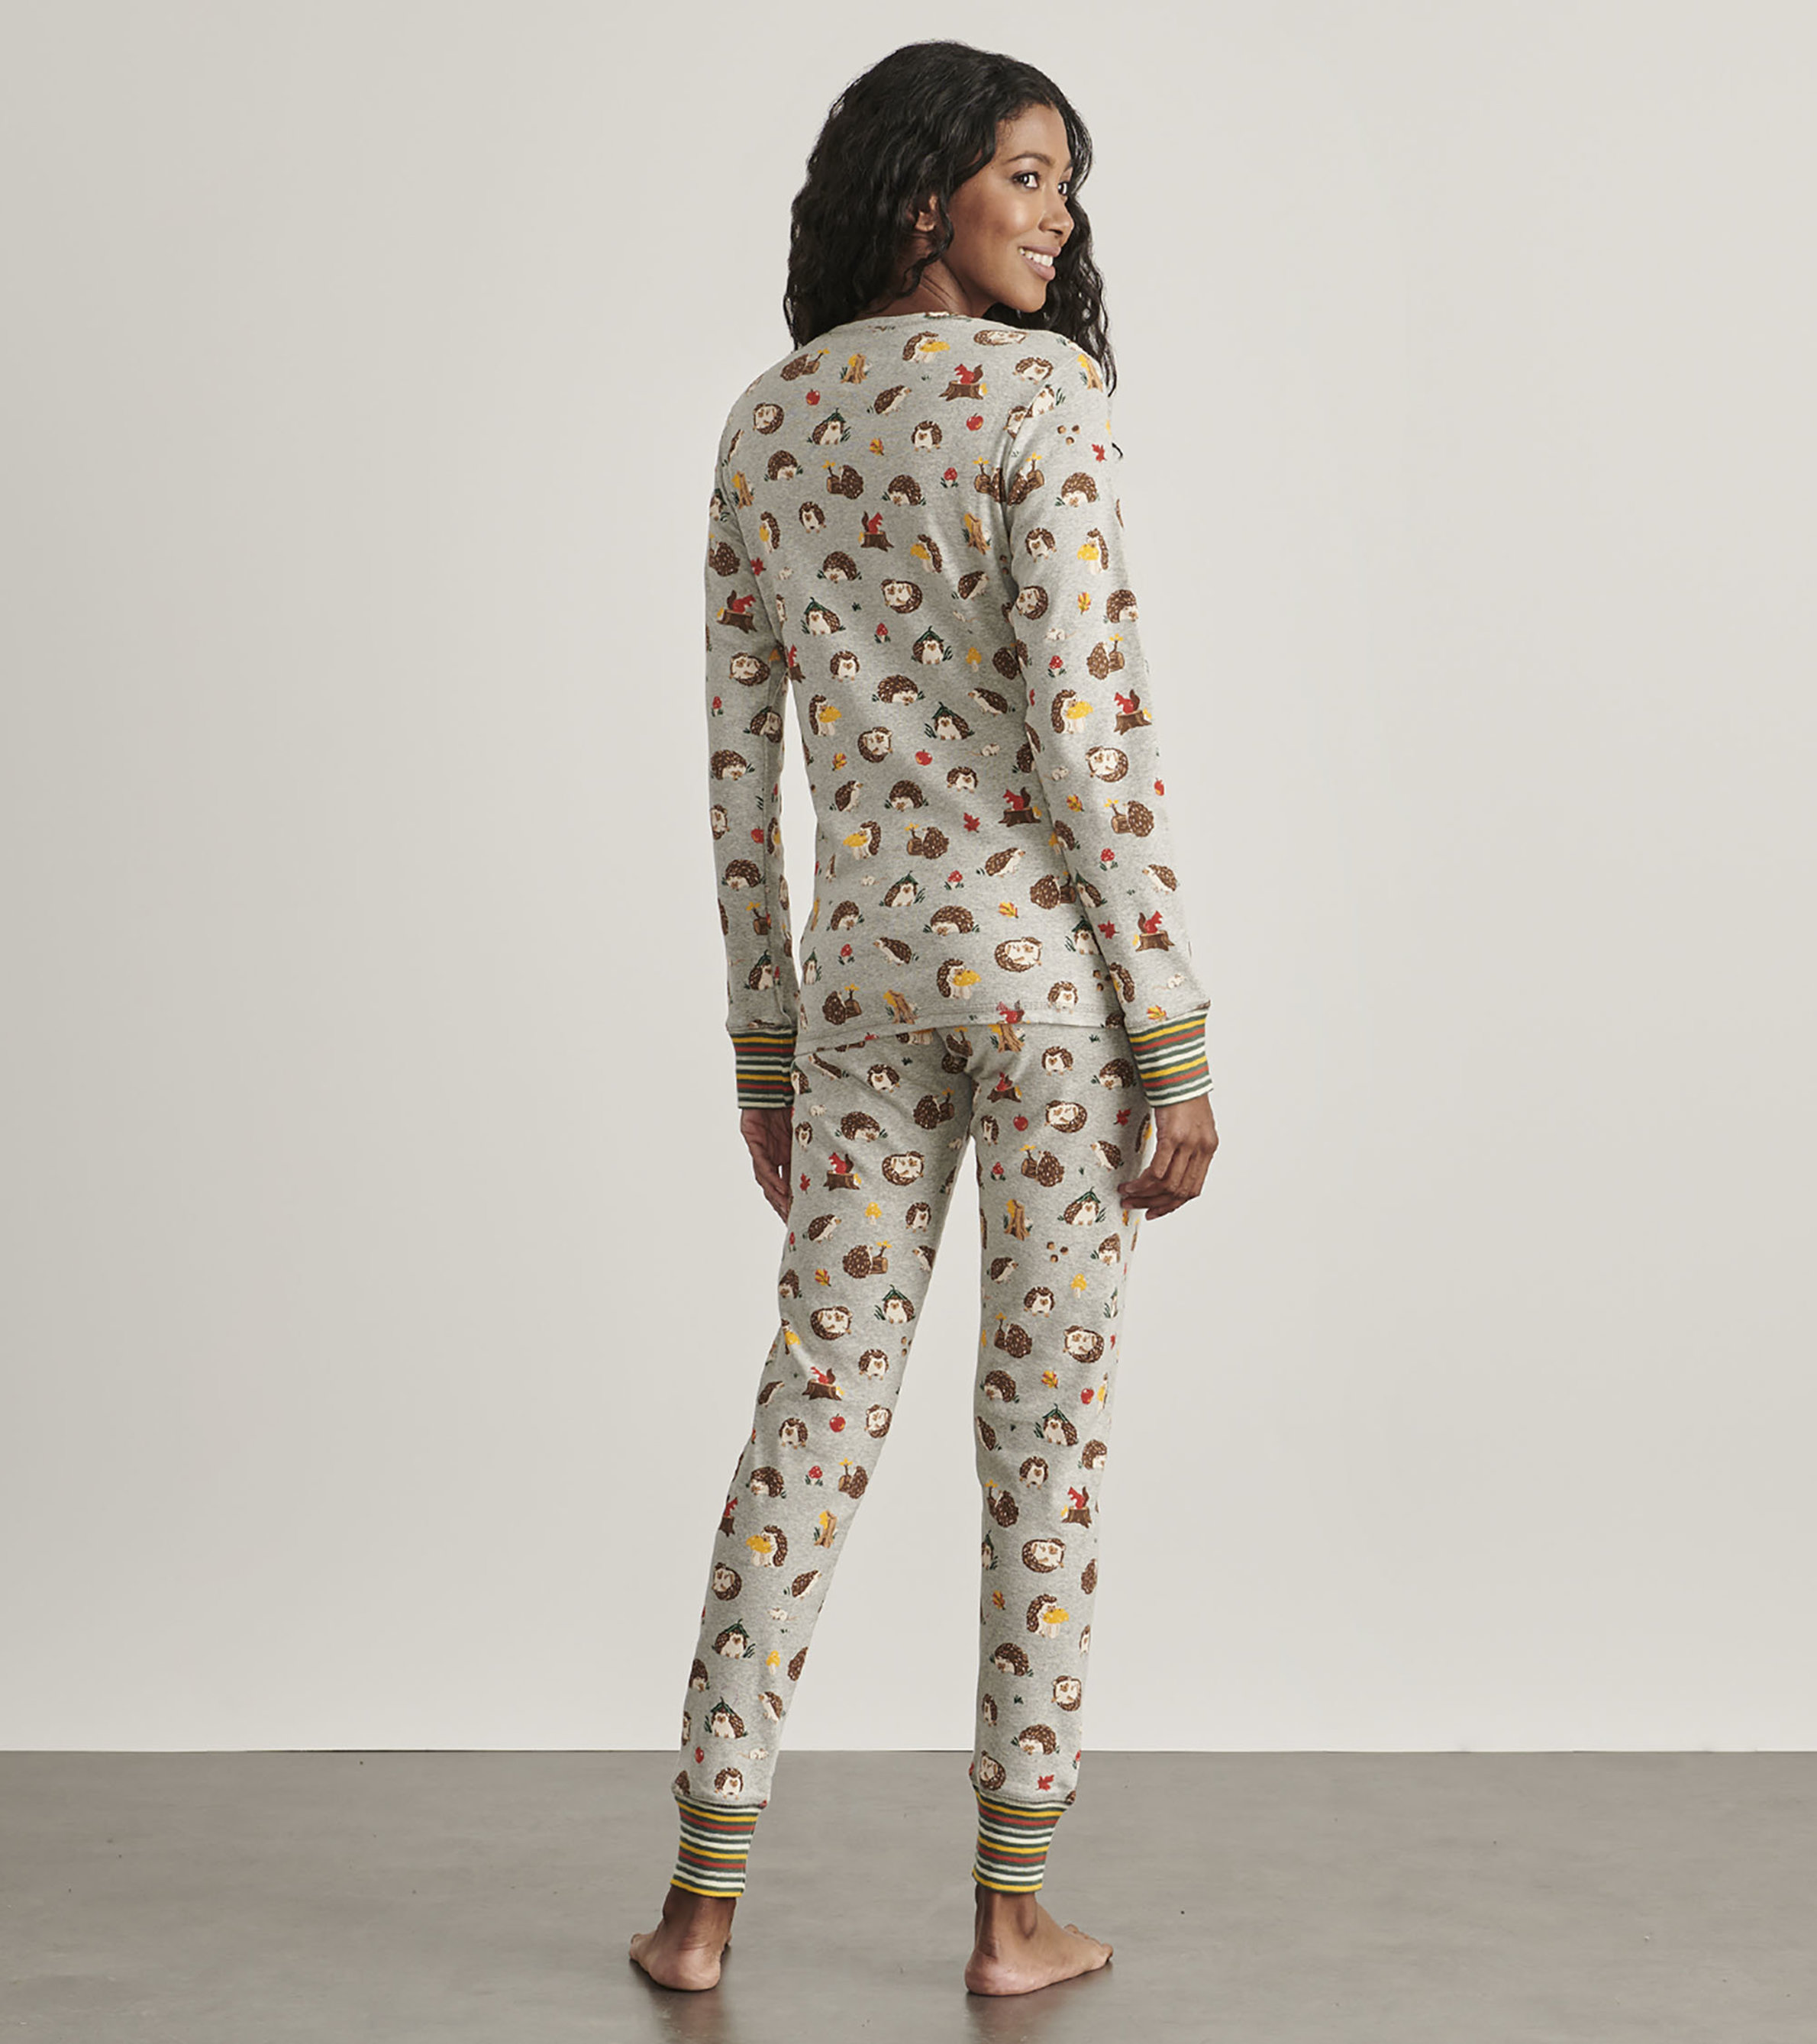 Women's Cotton Pajamas & Cotton PJ Sets